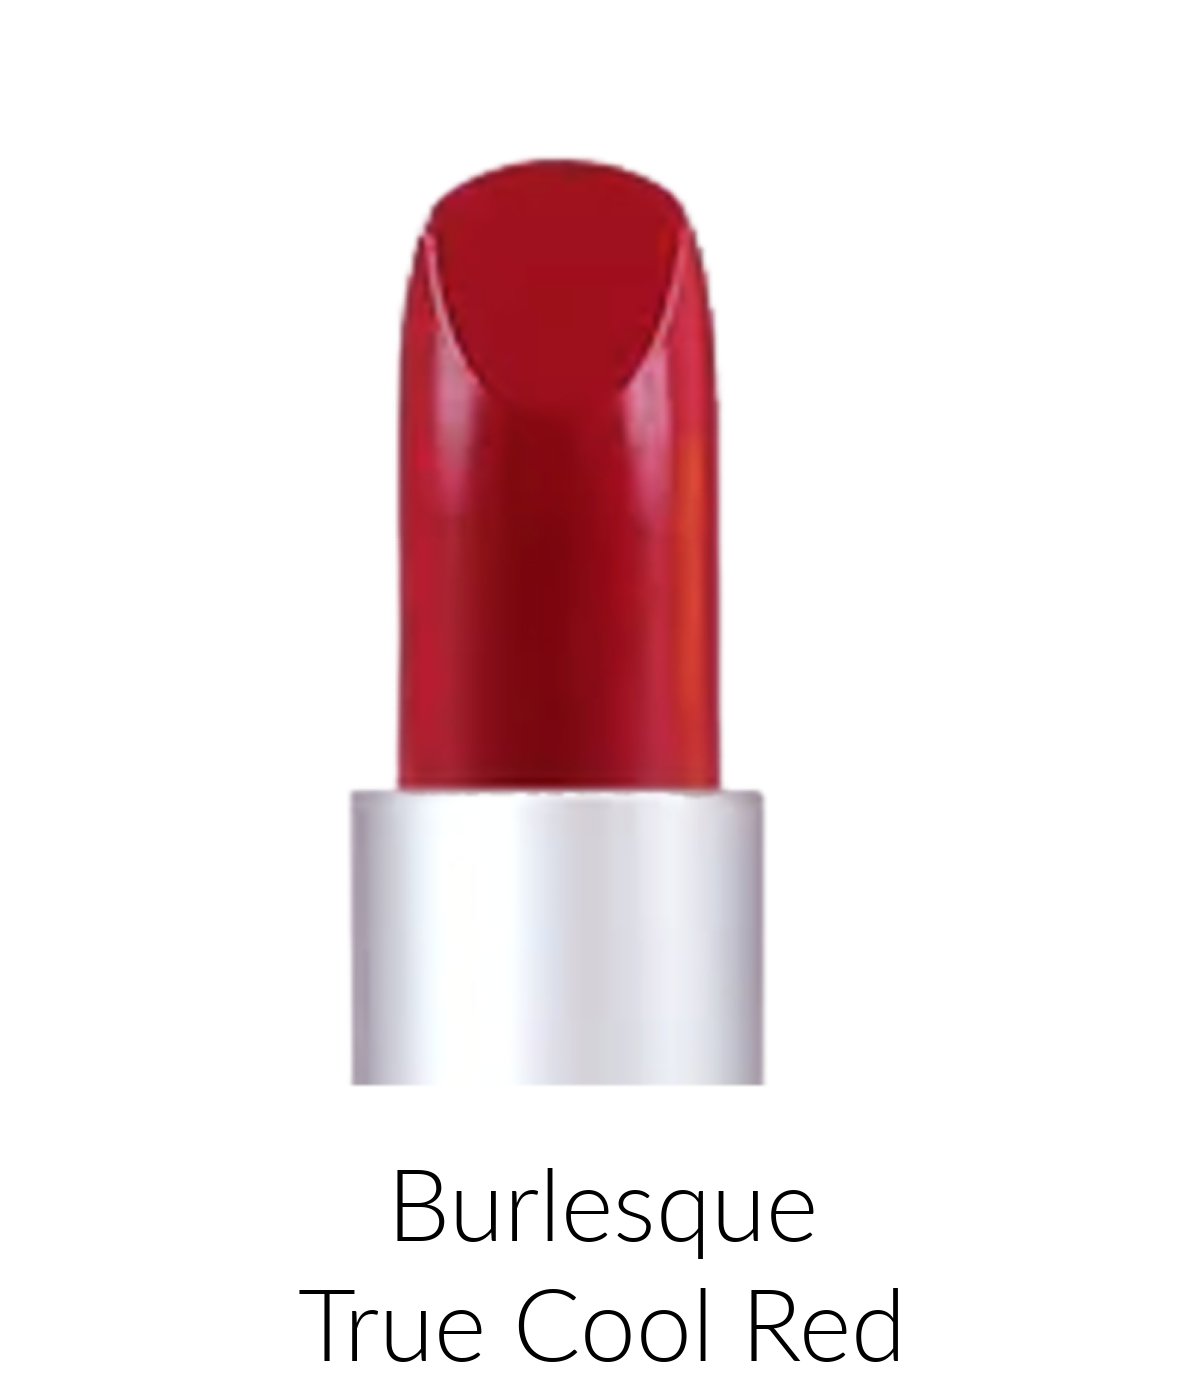 LTW Burlesque red lipstick color swatch